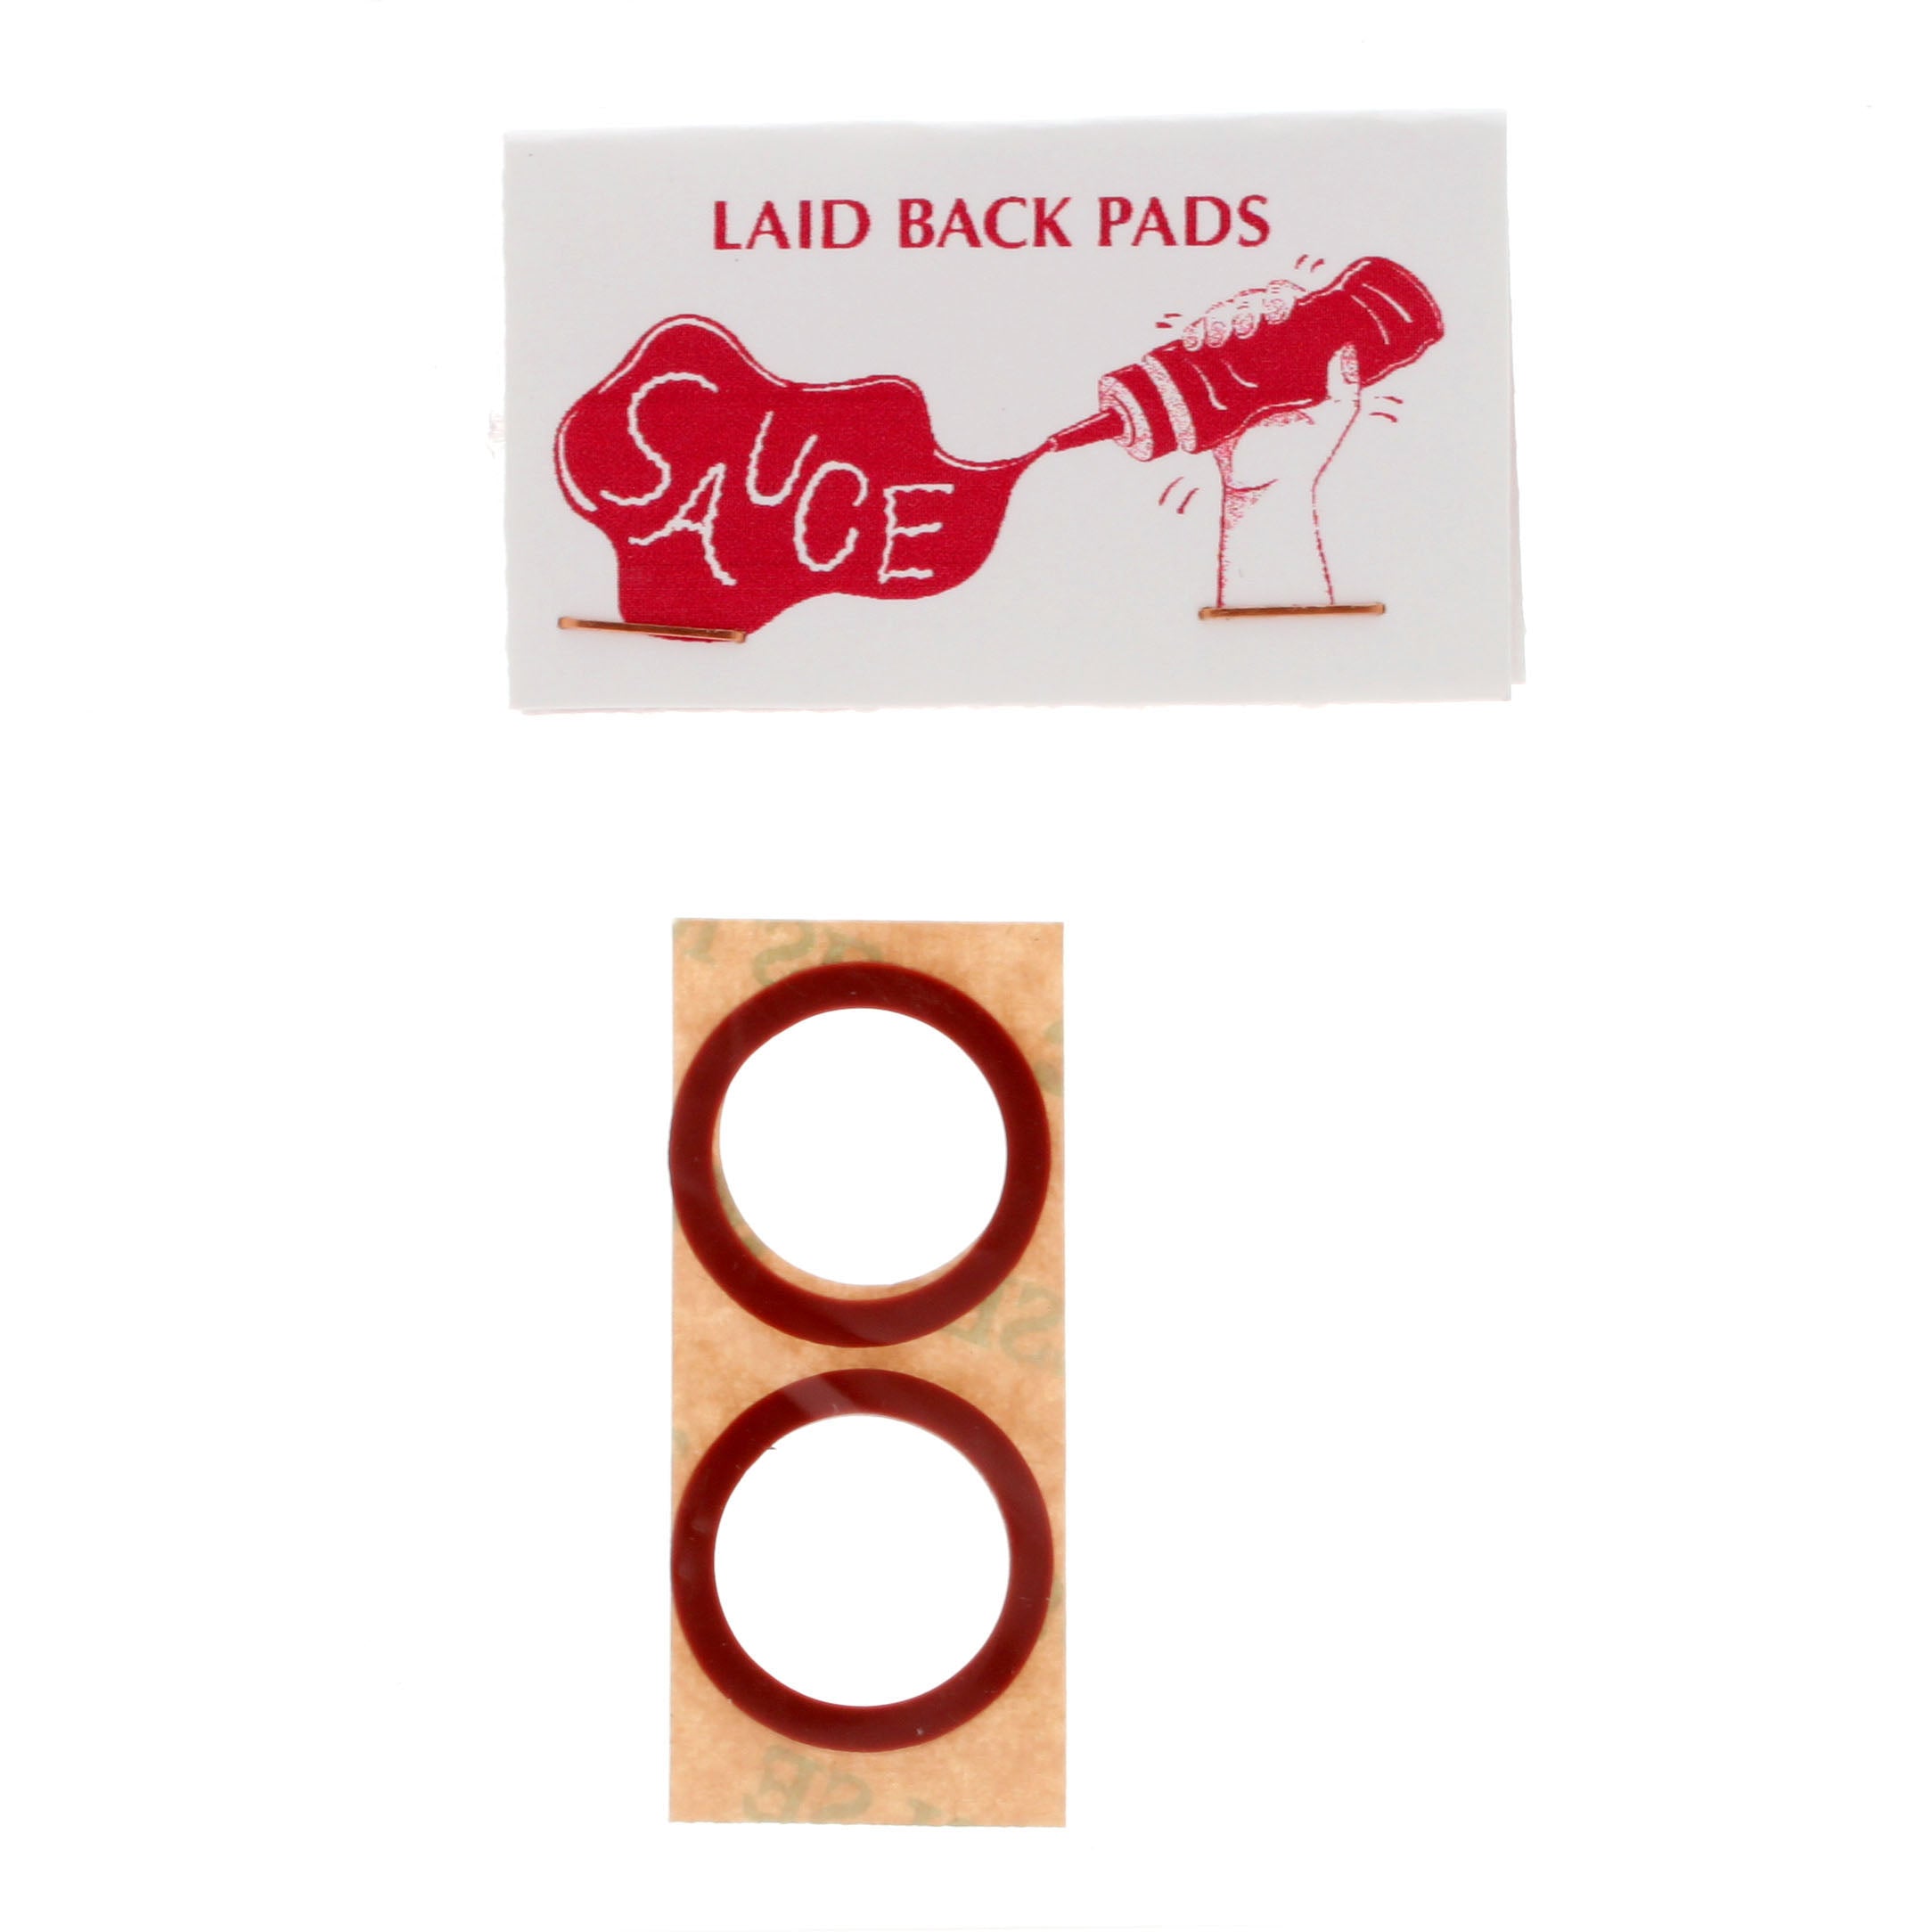 Laid Back Pads Slim (2pcs)